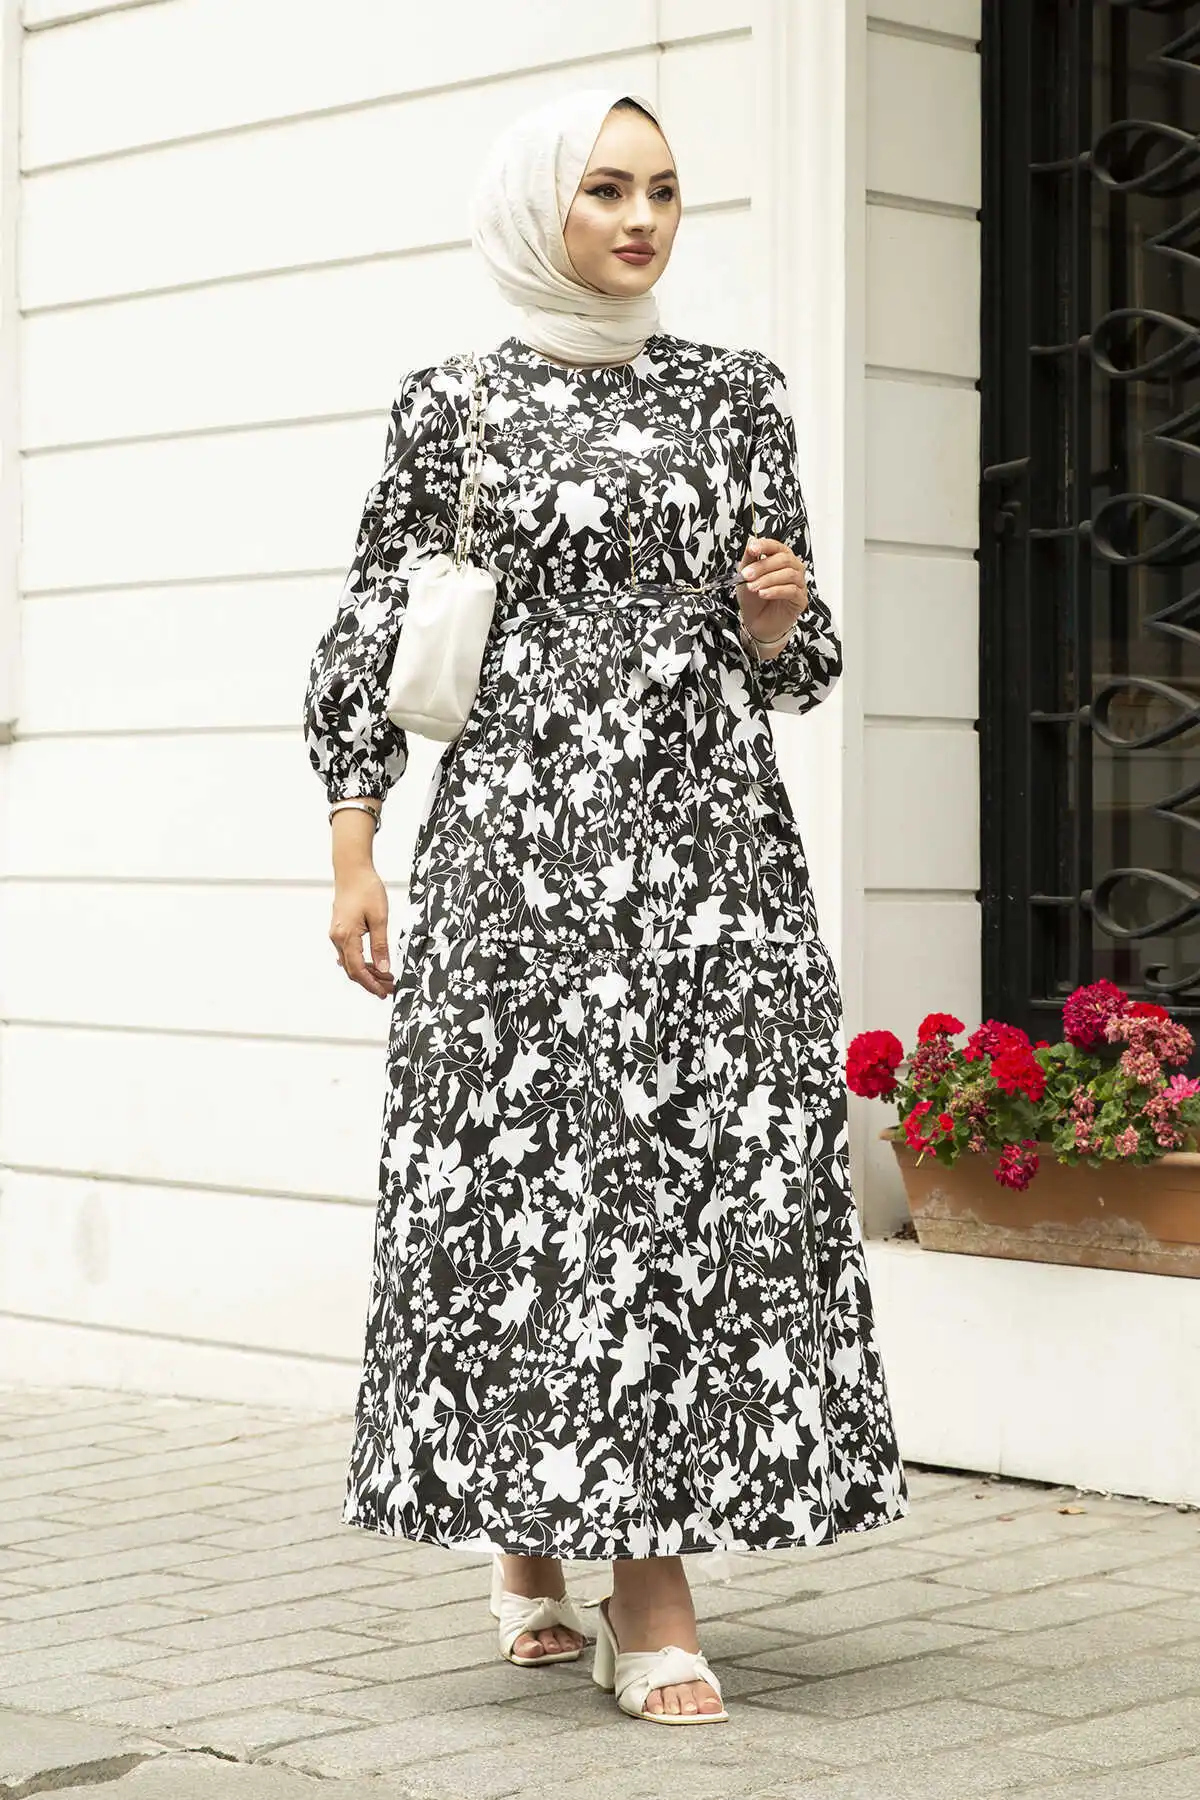 Waist Belted Skirt Frilly Hijab Turkey Dress For Women Gulf Abayas Modest Fashion Arabic Ramadan Clothes Moroccan Jilbab 2022